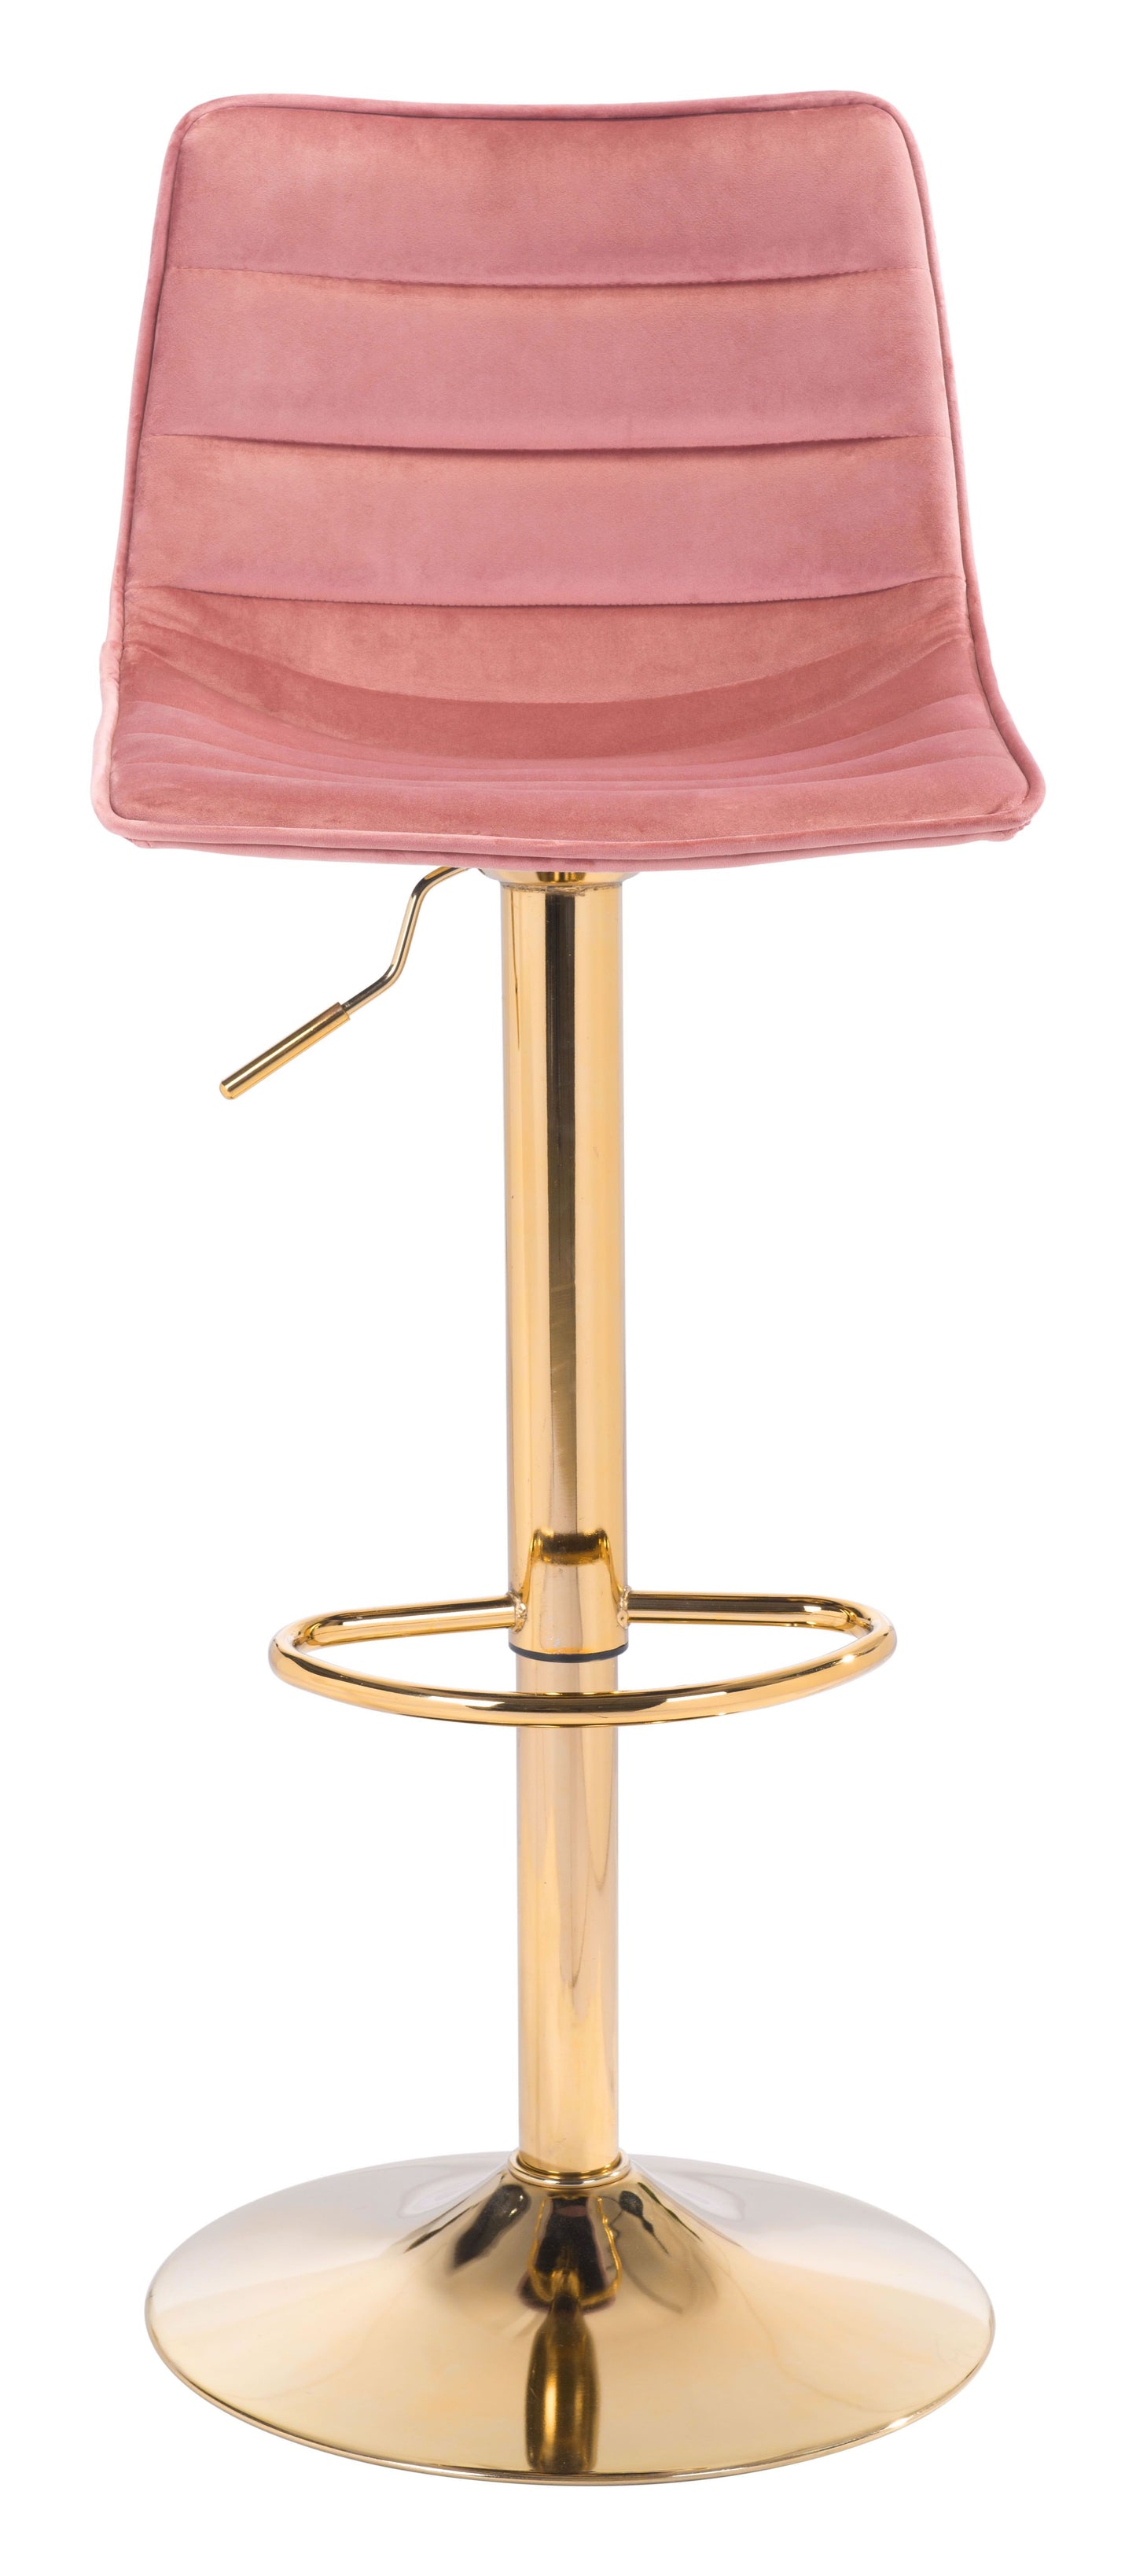 Prima Bar Chair Pink & Gold